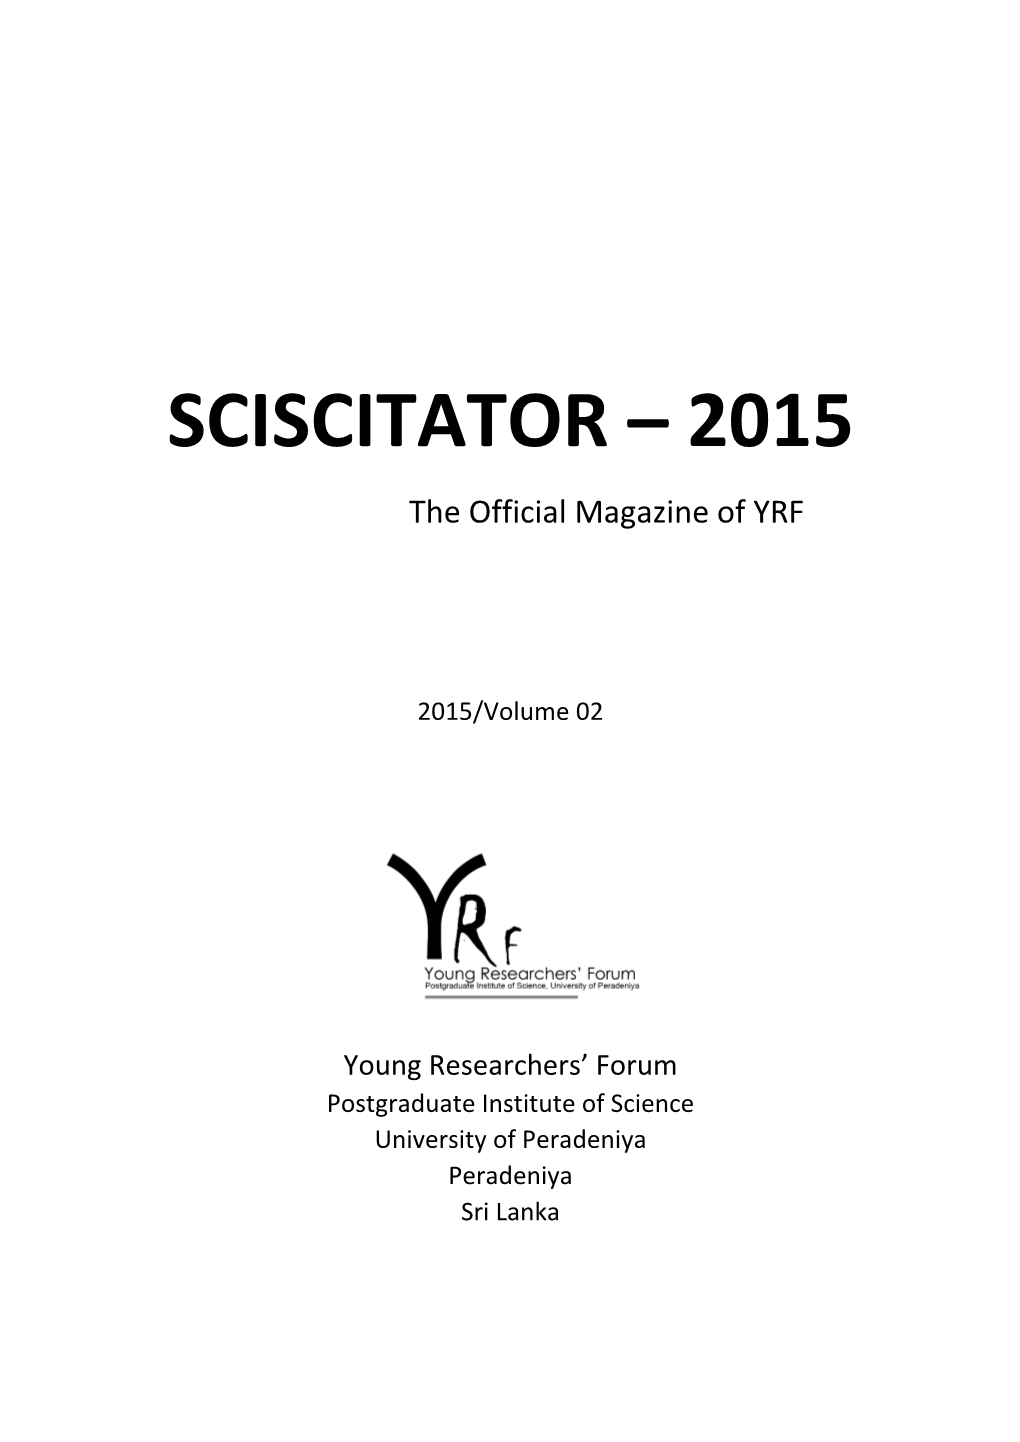 SCISCITATOR – 2015 the Official Magazine of YRF